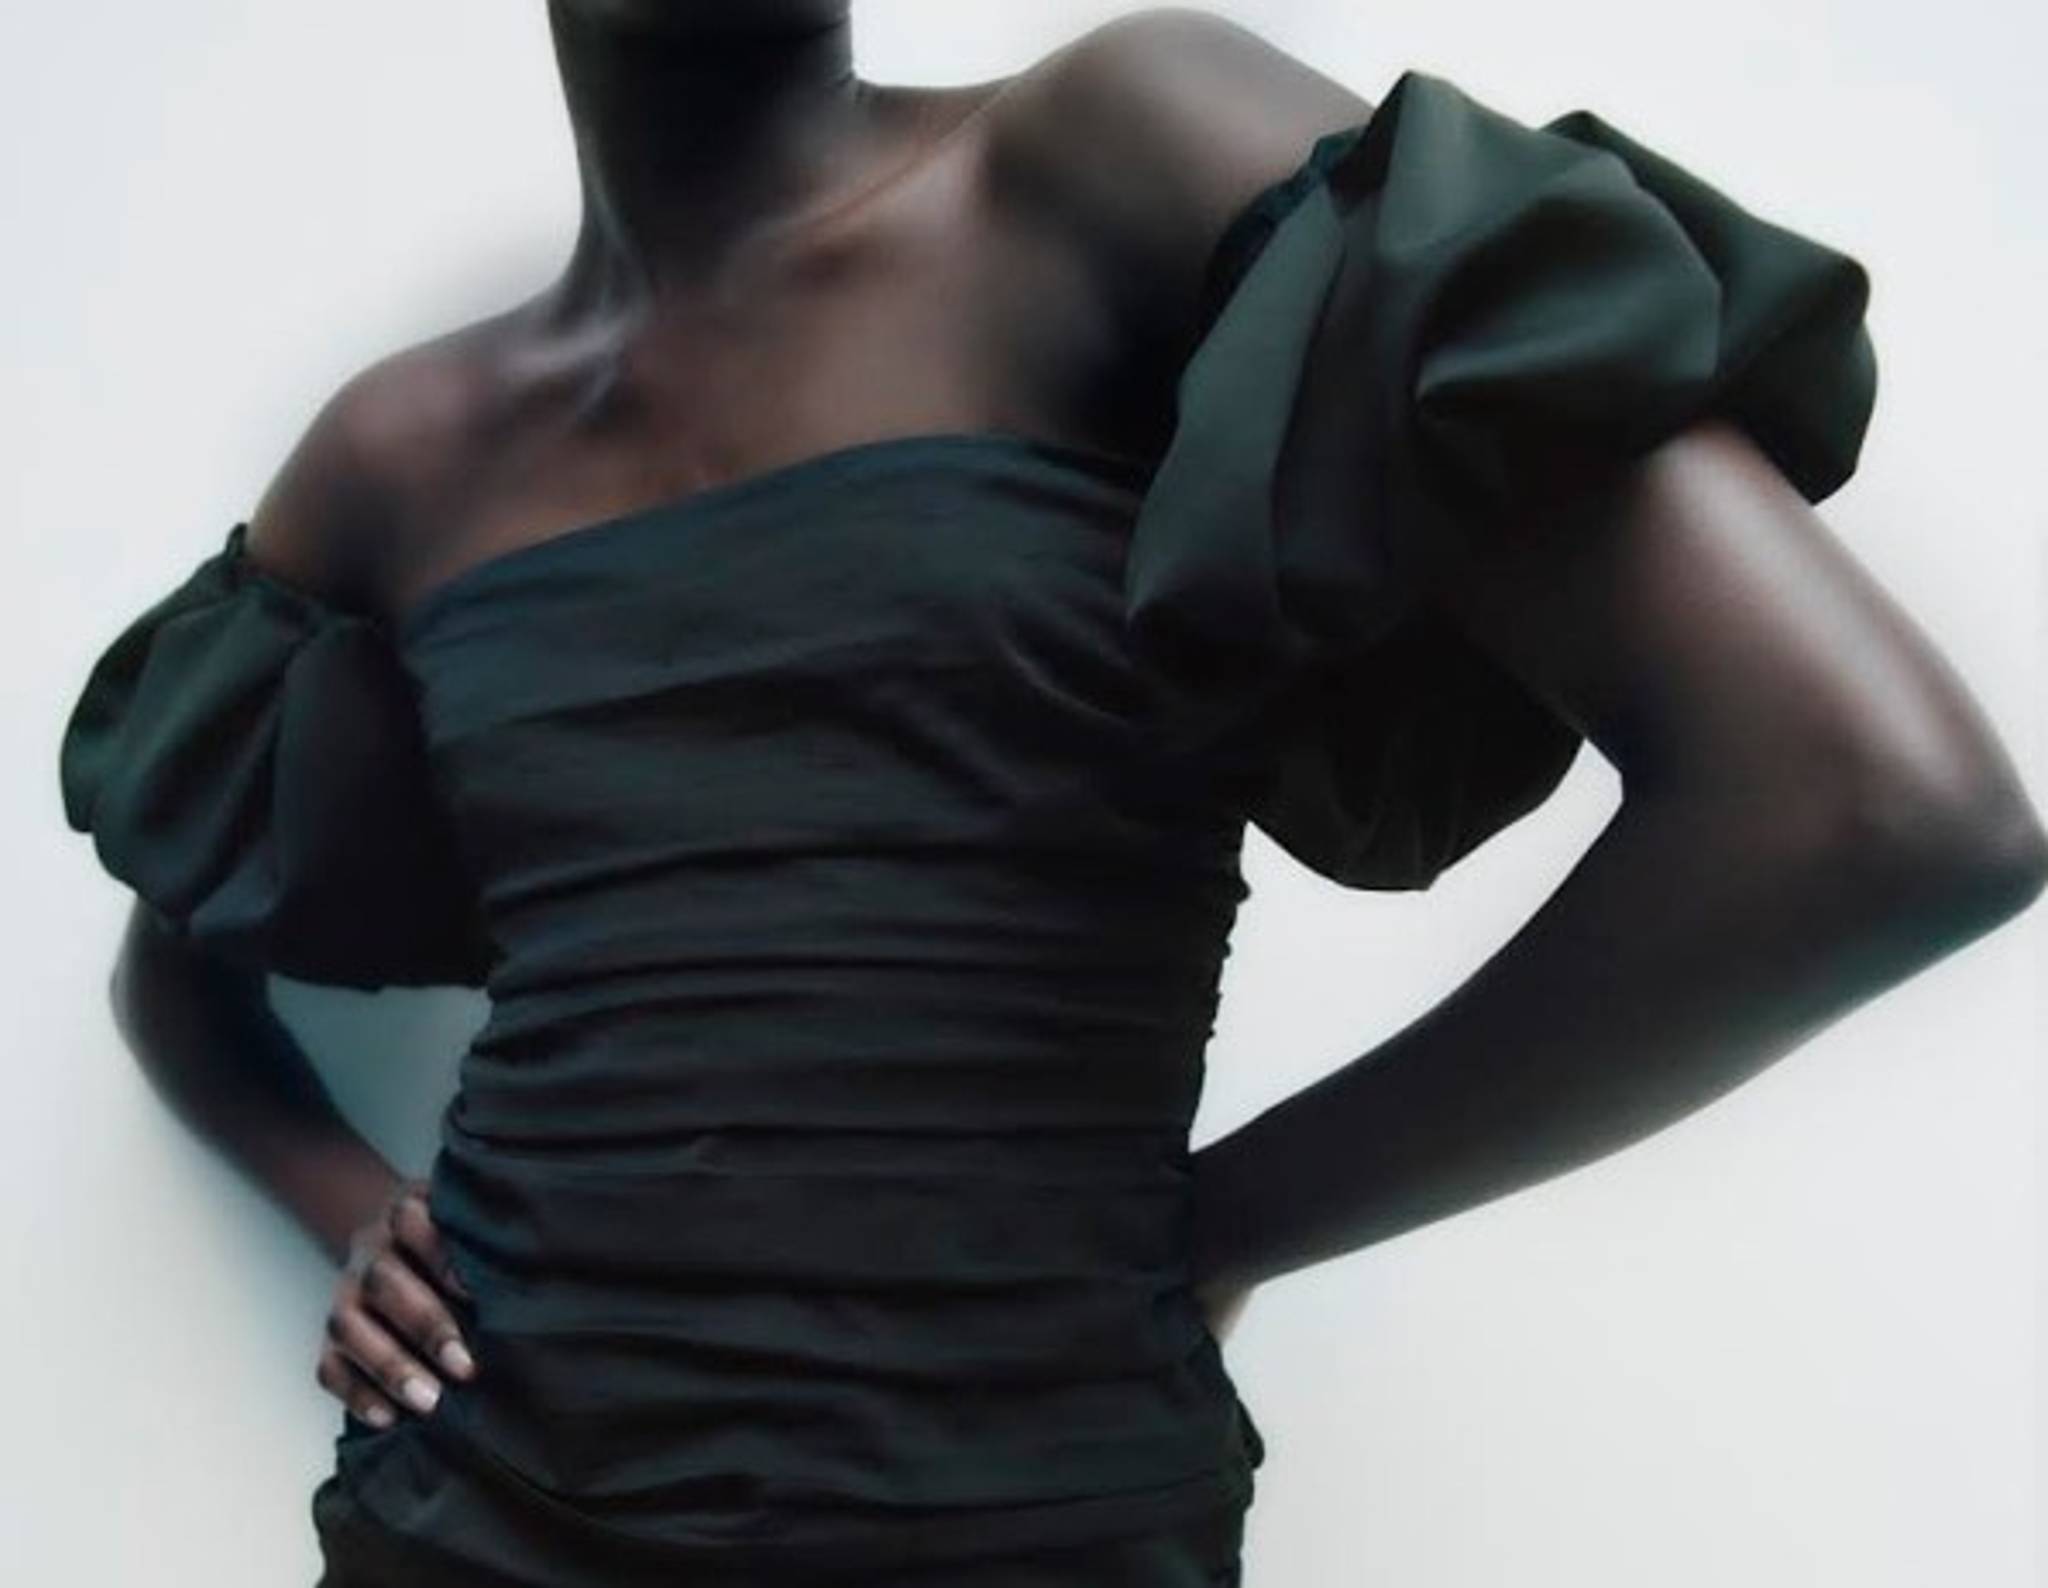 Zara collection speaks to eco-minded fashionistas